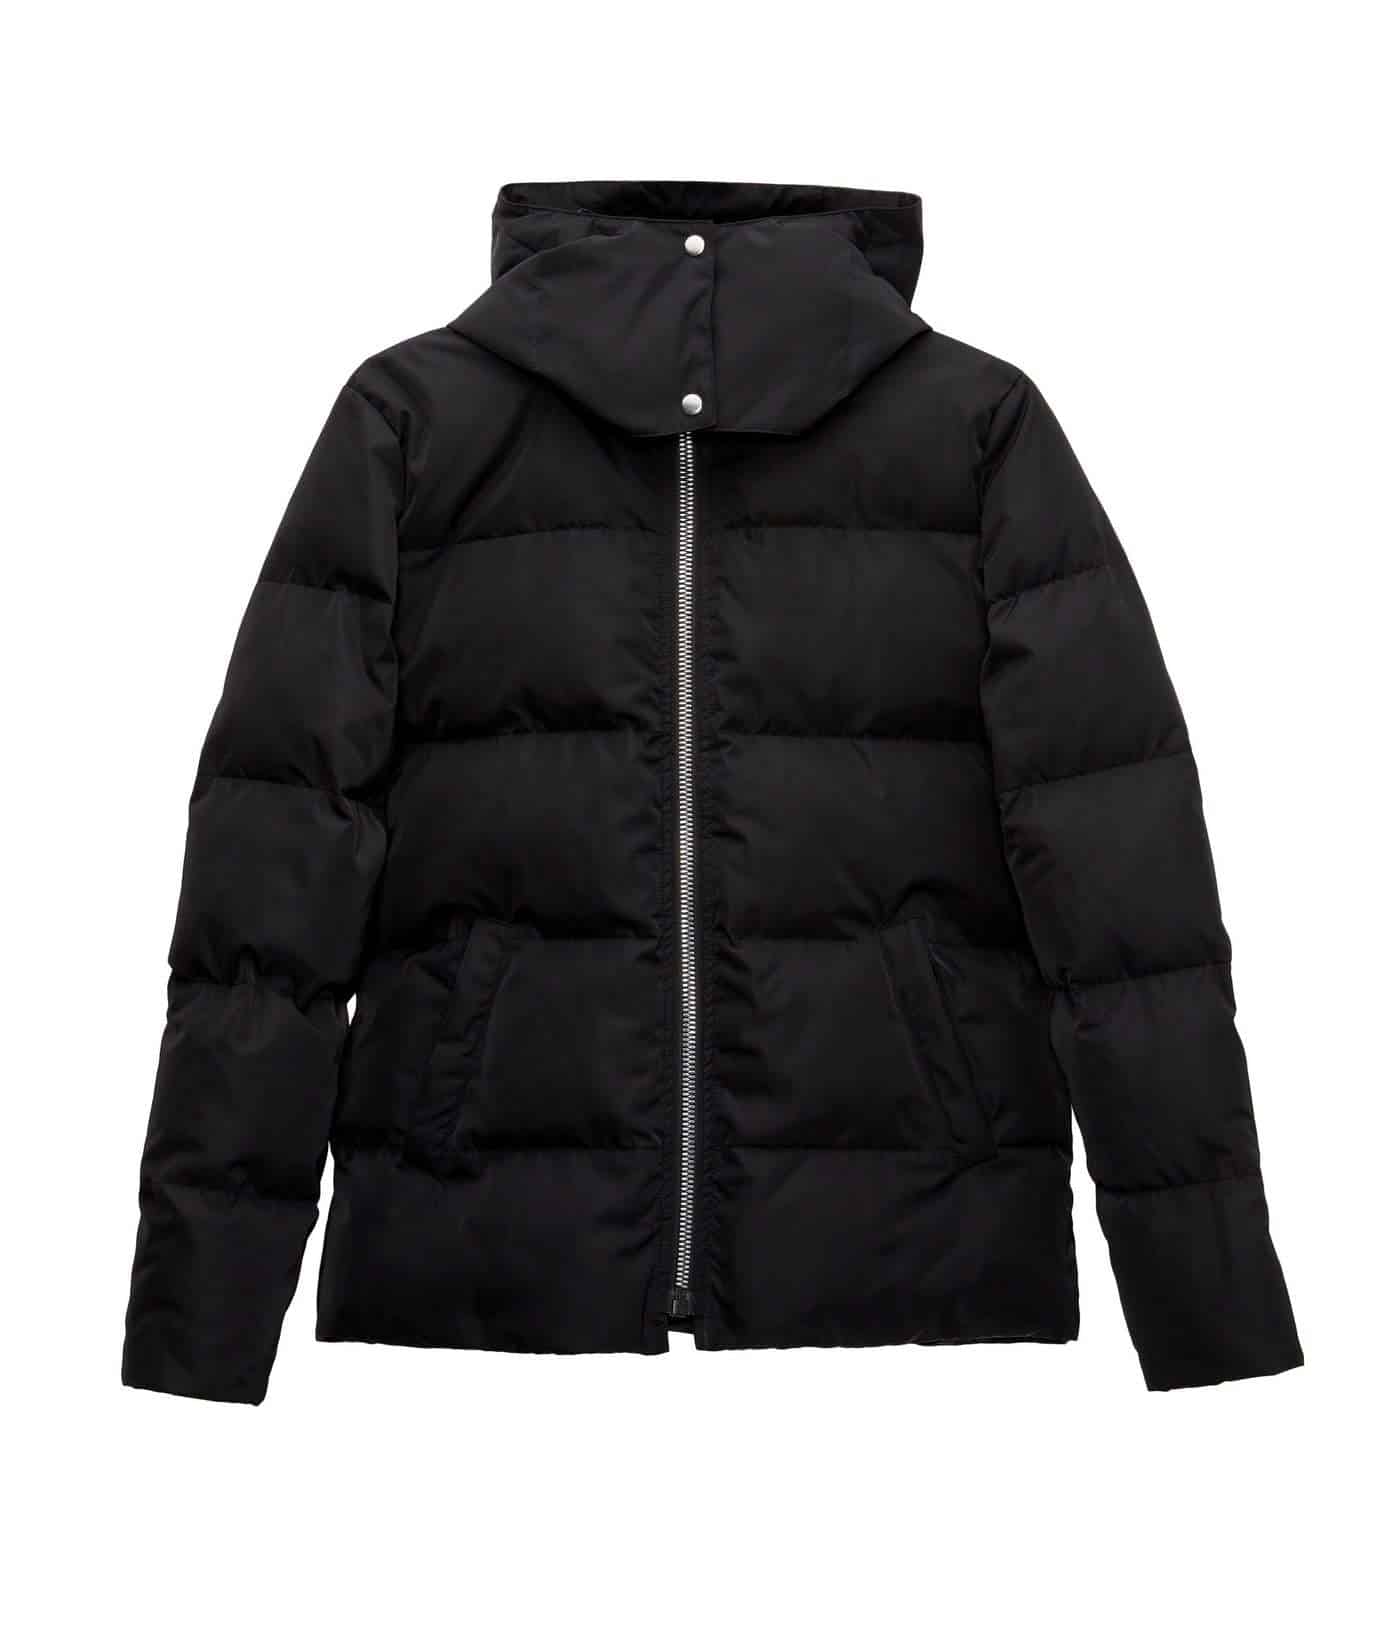 Black short puffer jacket with silver zipper